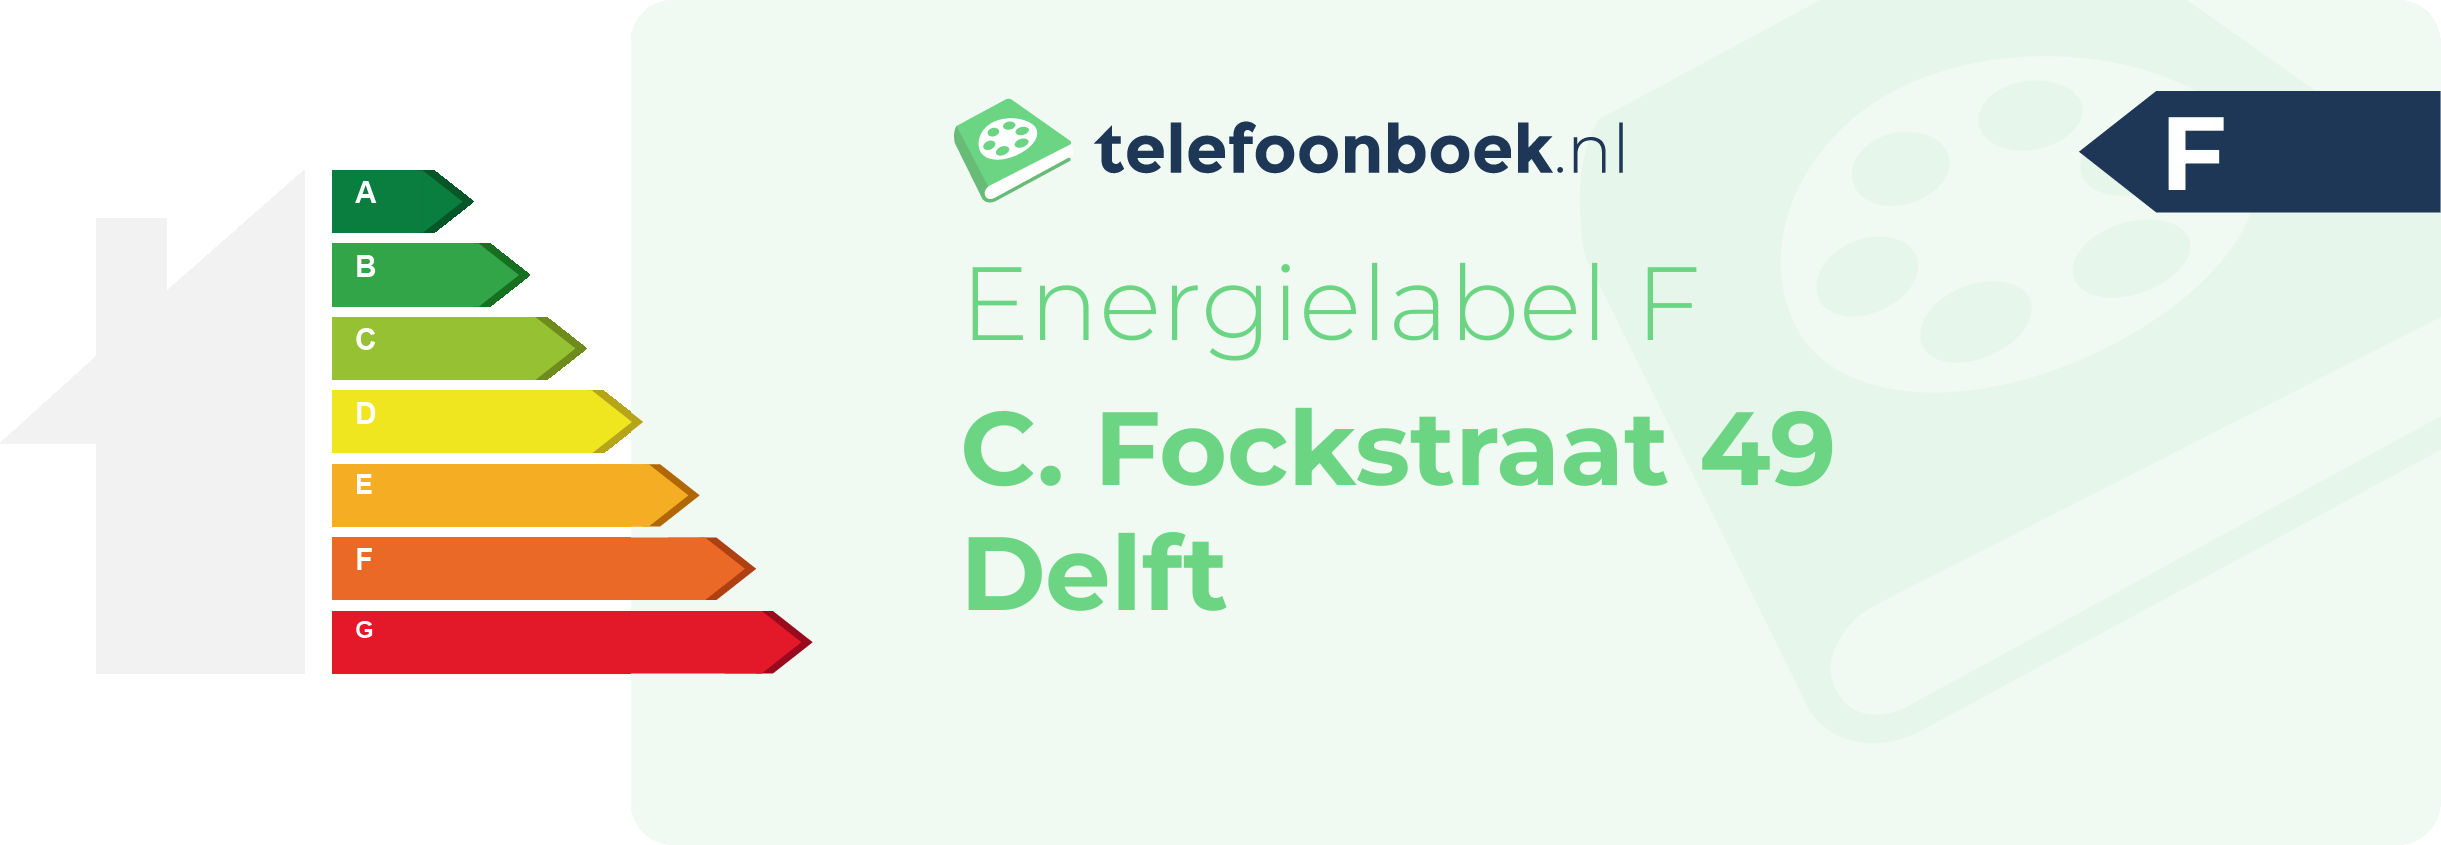 Energielabel C. Fockstraat 49 Delft